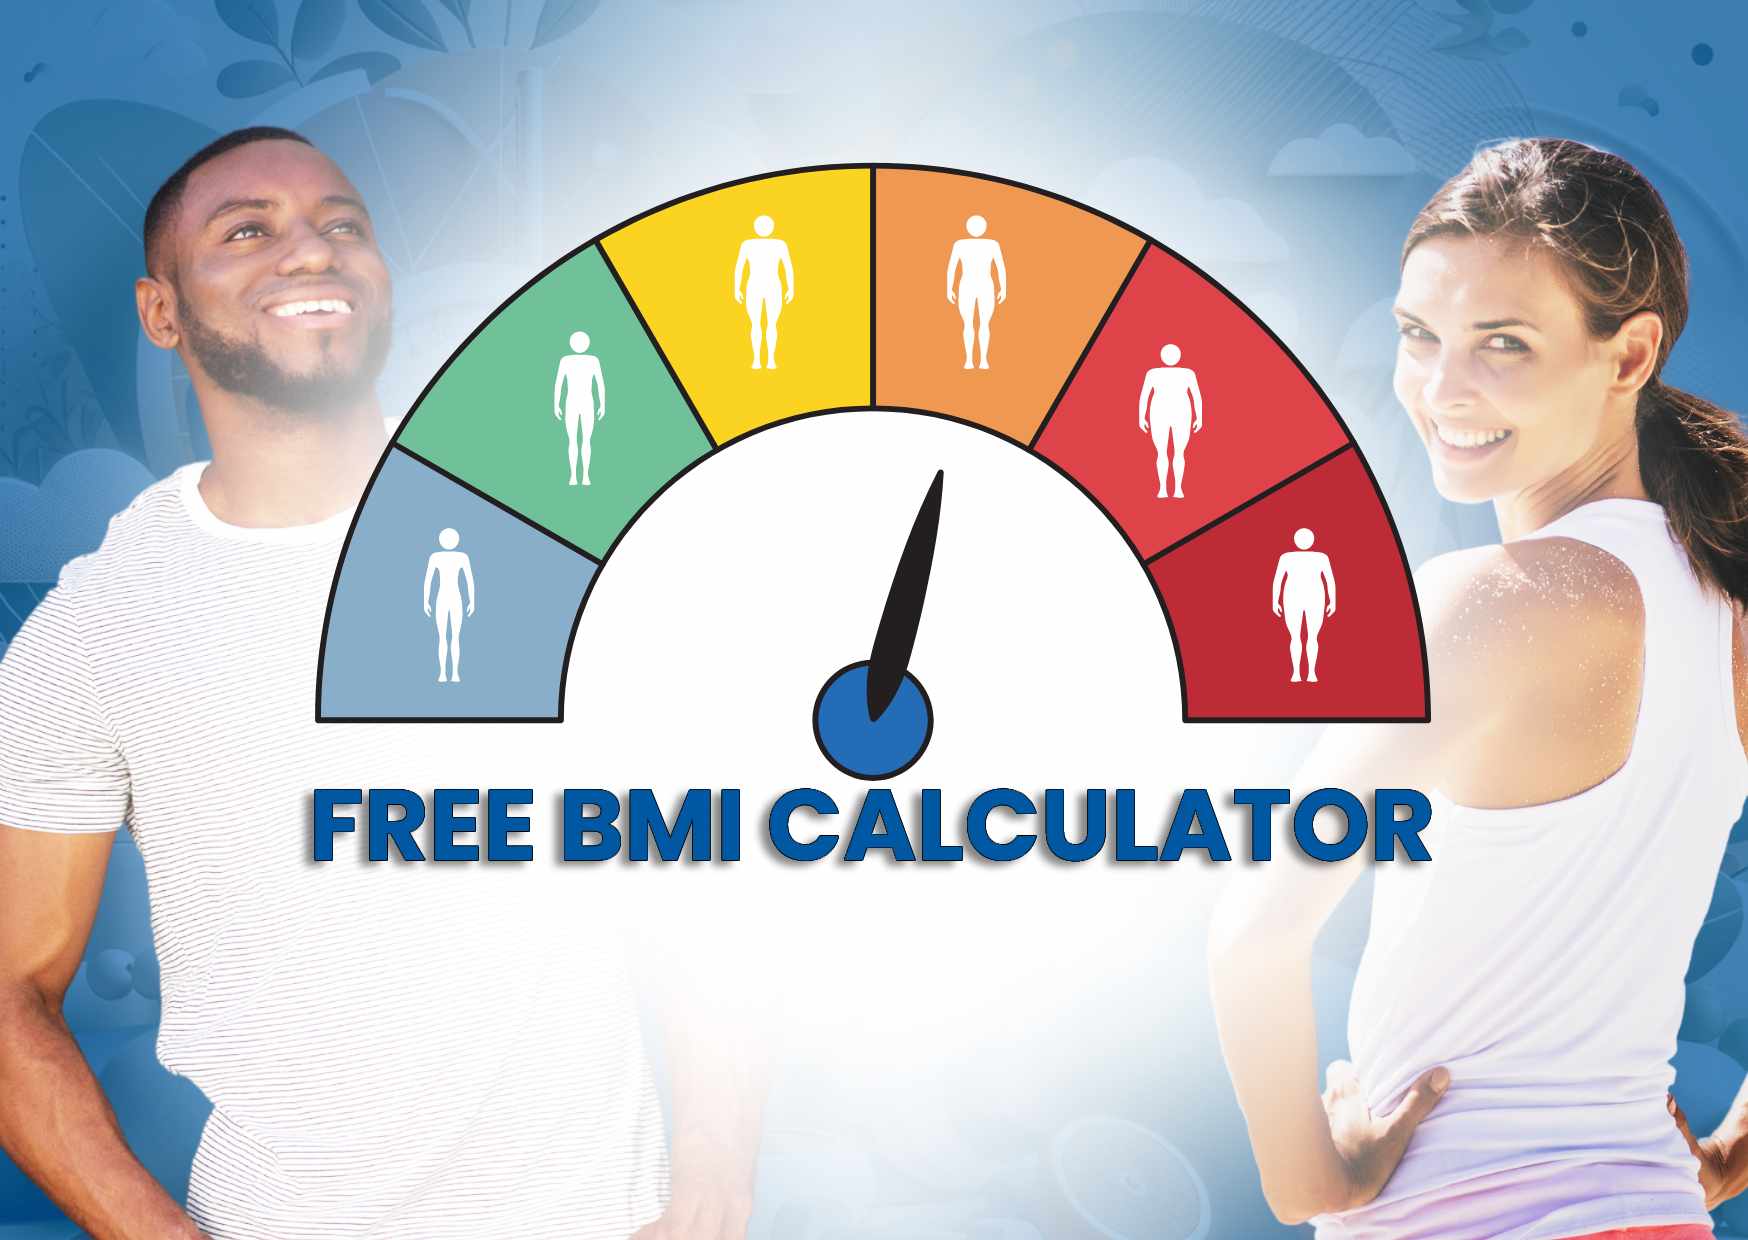 Free-BMI-Calculator-Blog-Cover